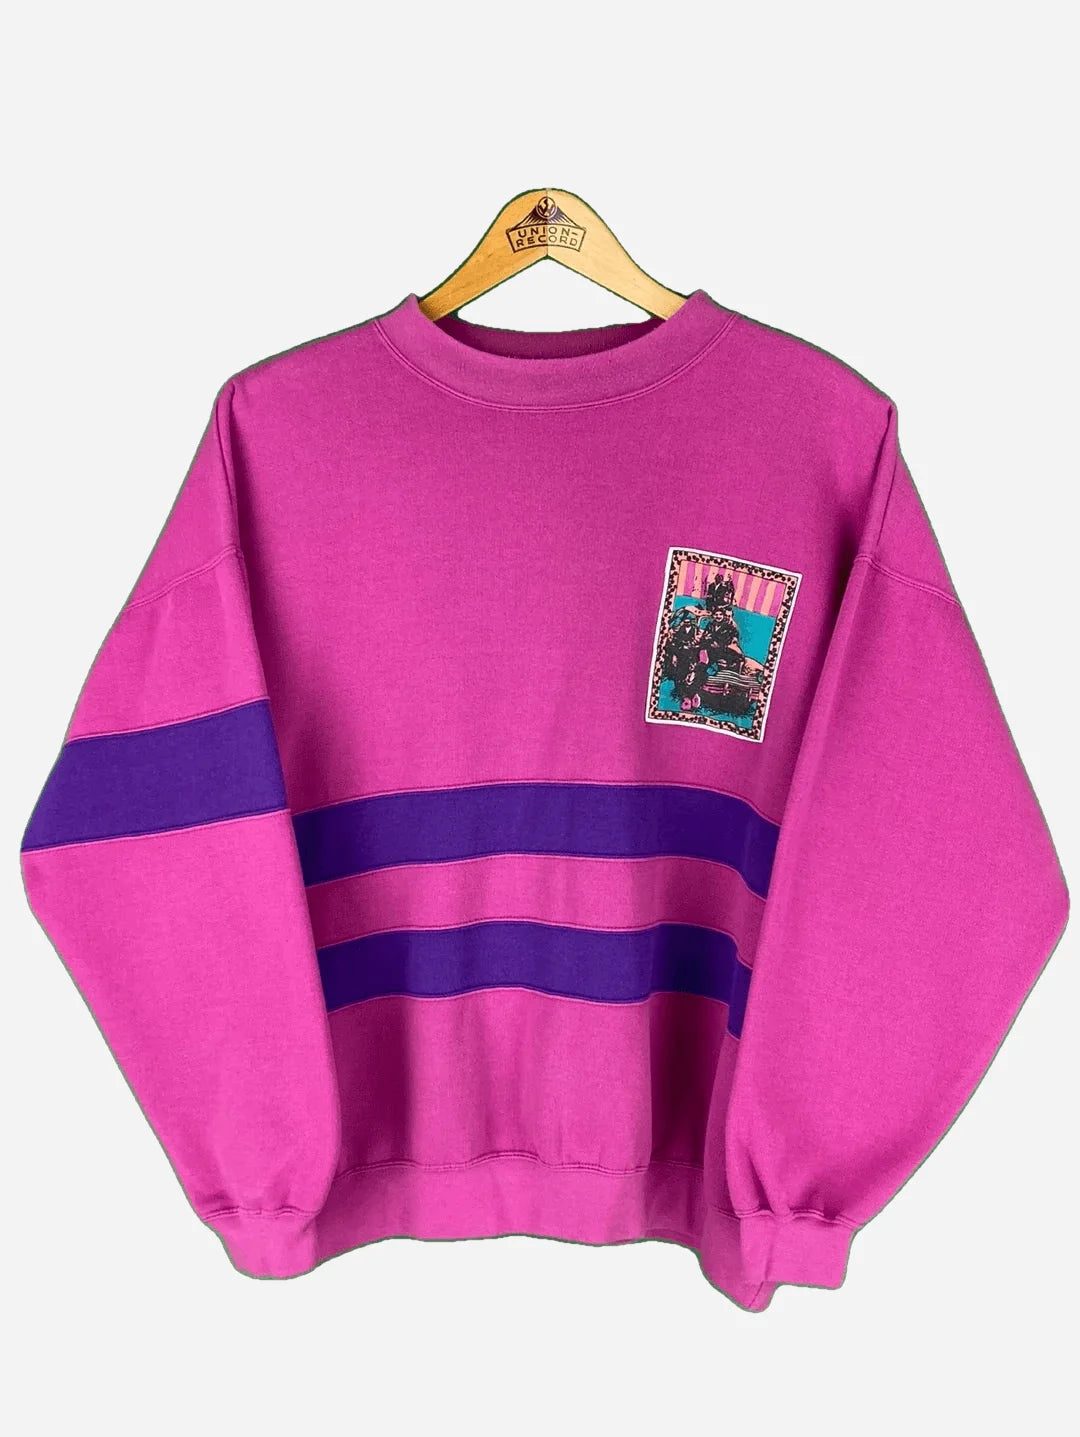 C&A Sweater (S)